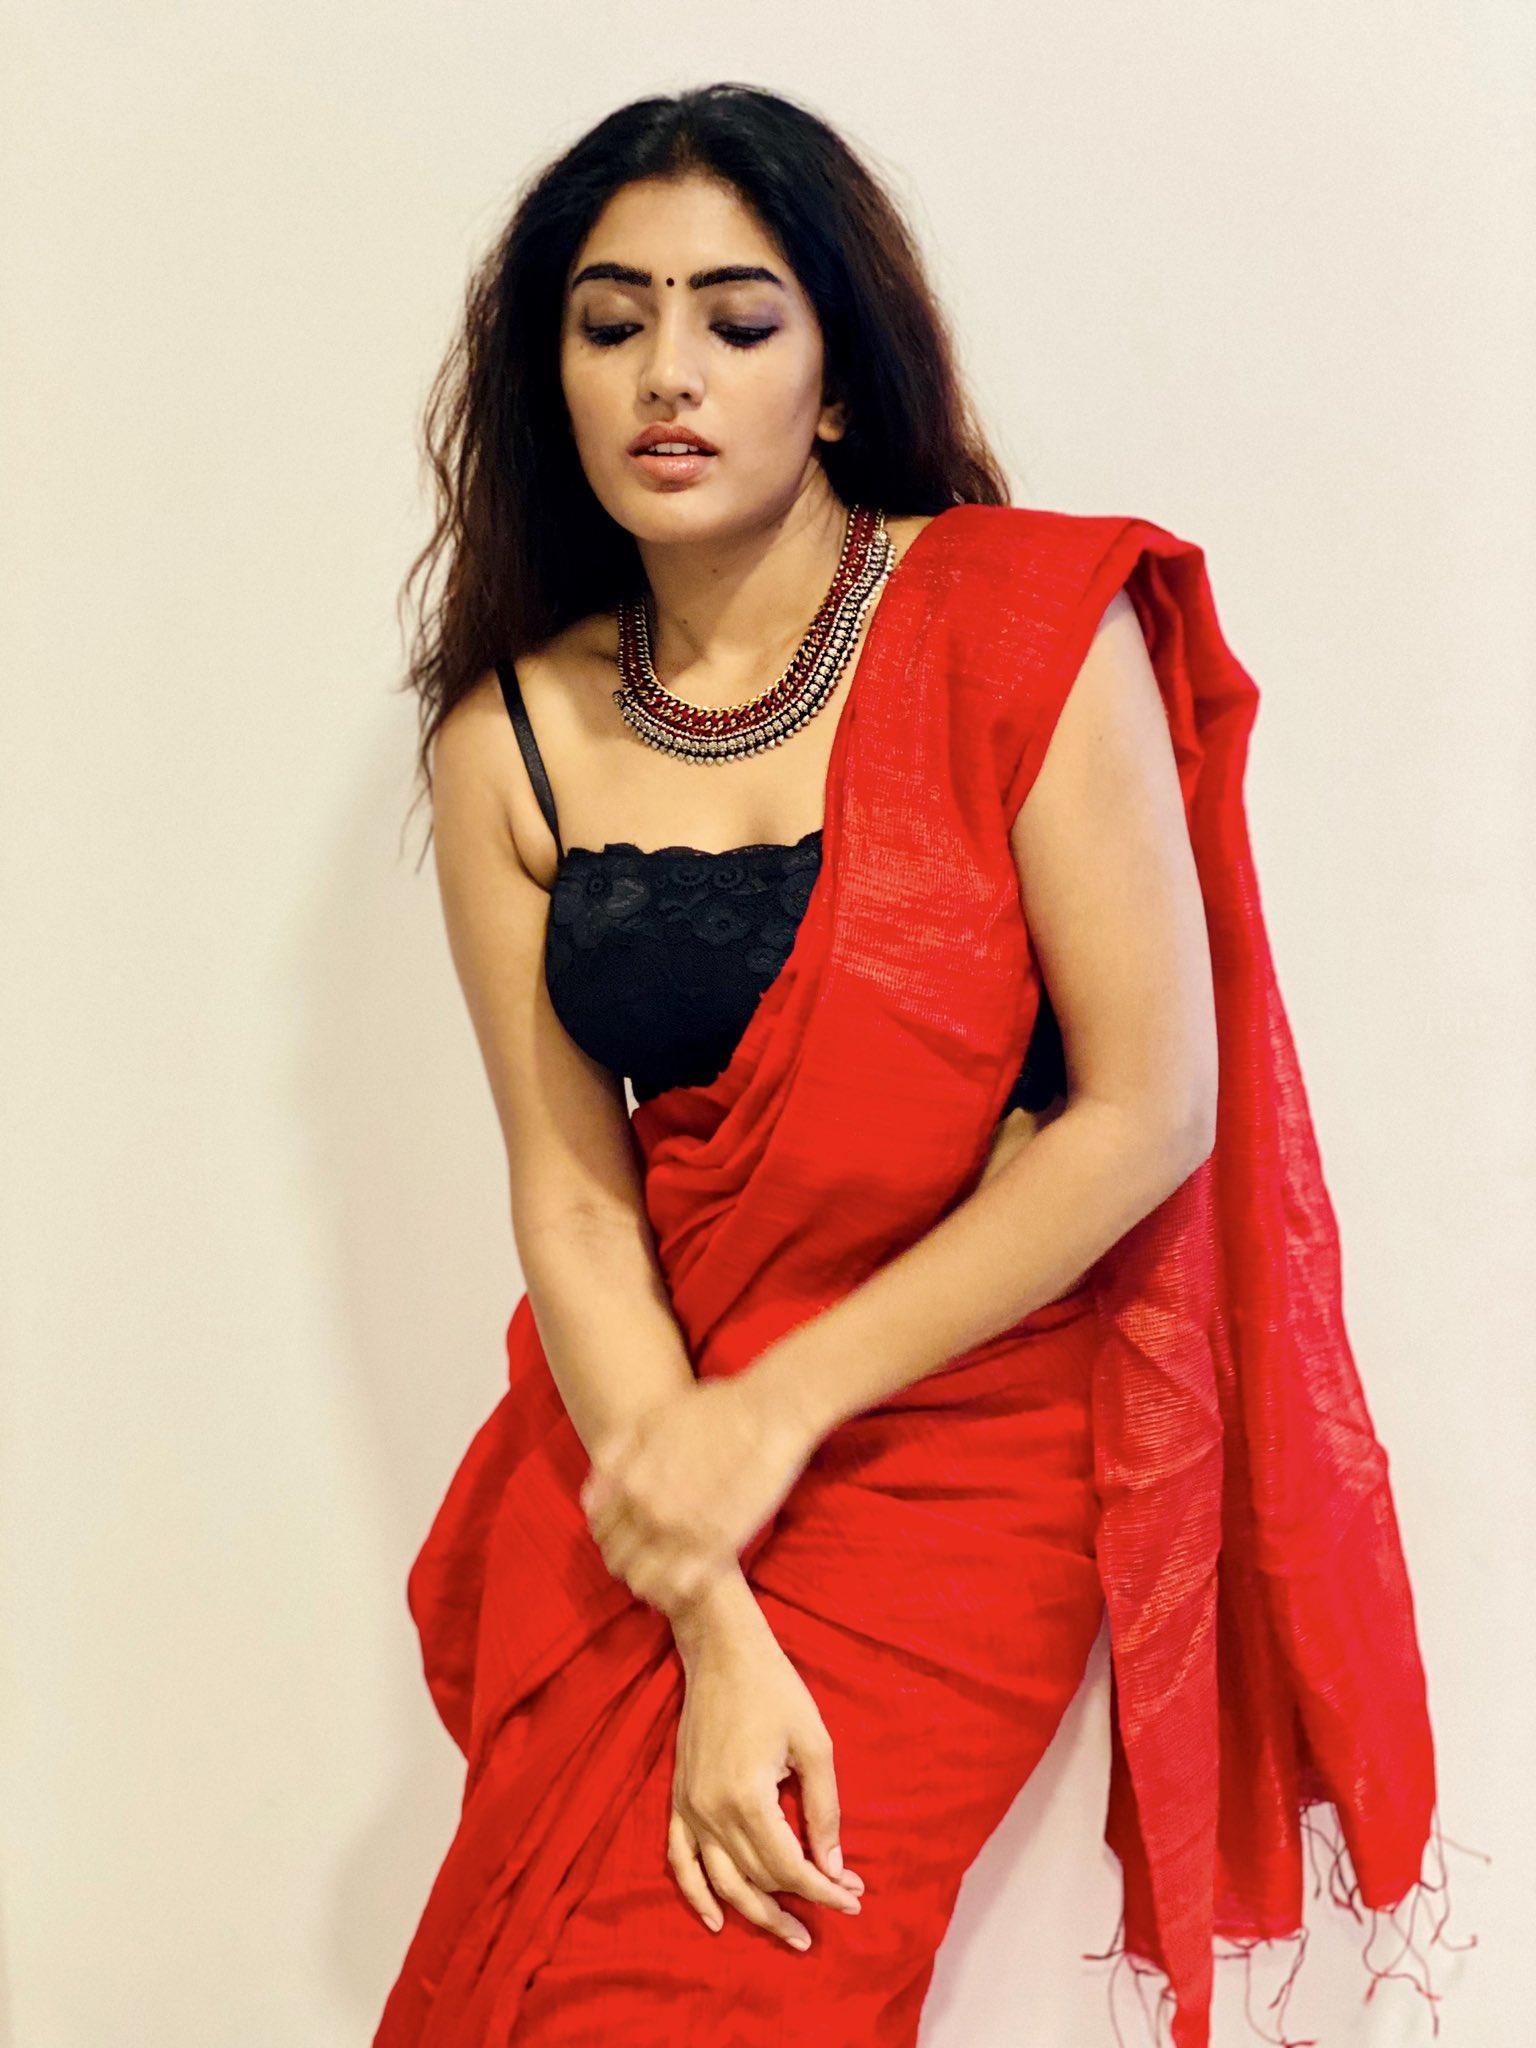 eesha rebba hot red saree photos (1)